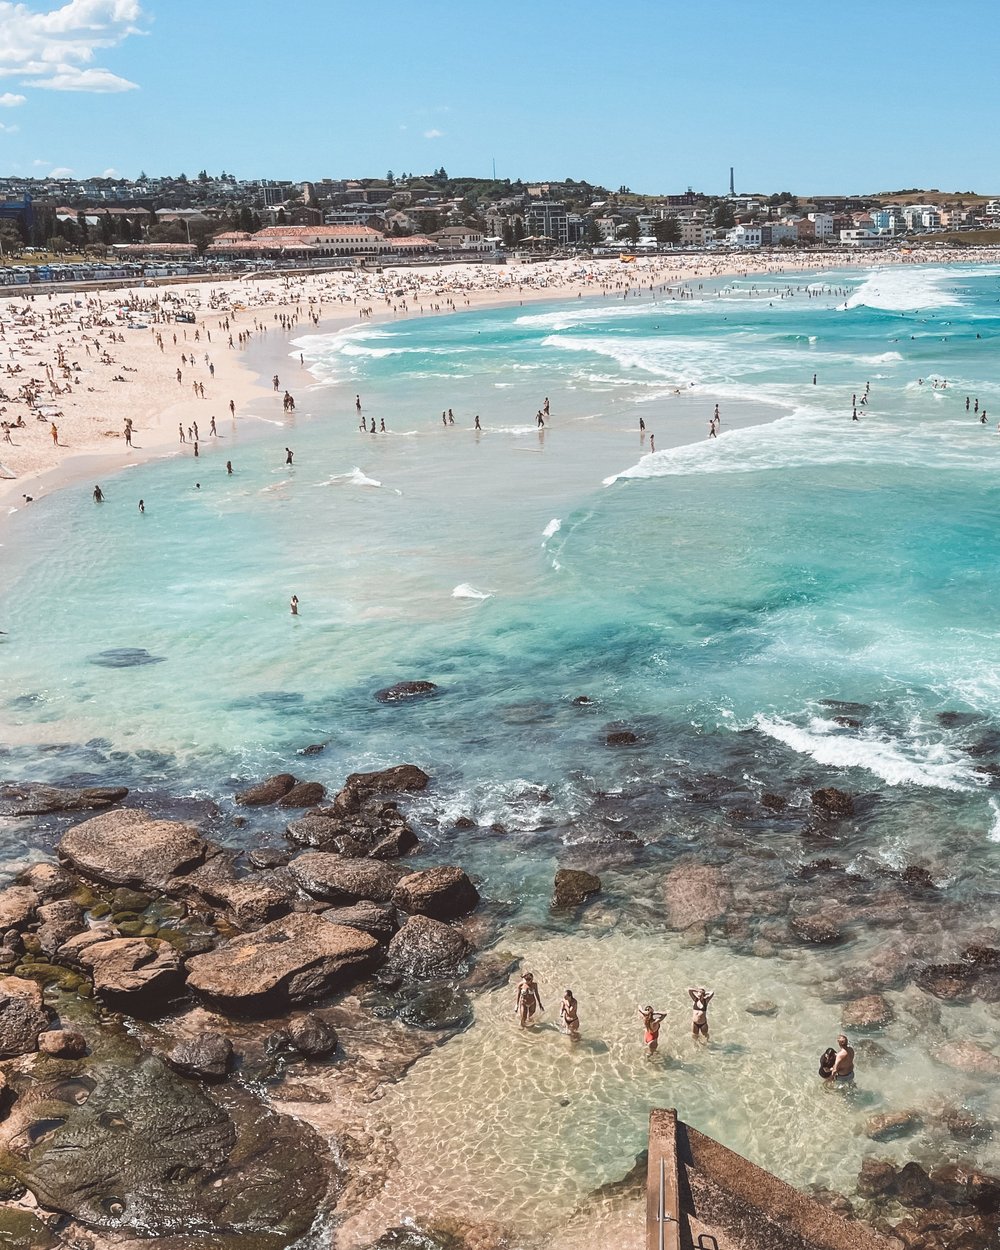 Bondi Beach on a hot summer day - Sydney - New South Wales (NSW) - Australia